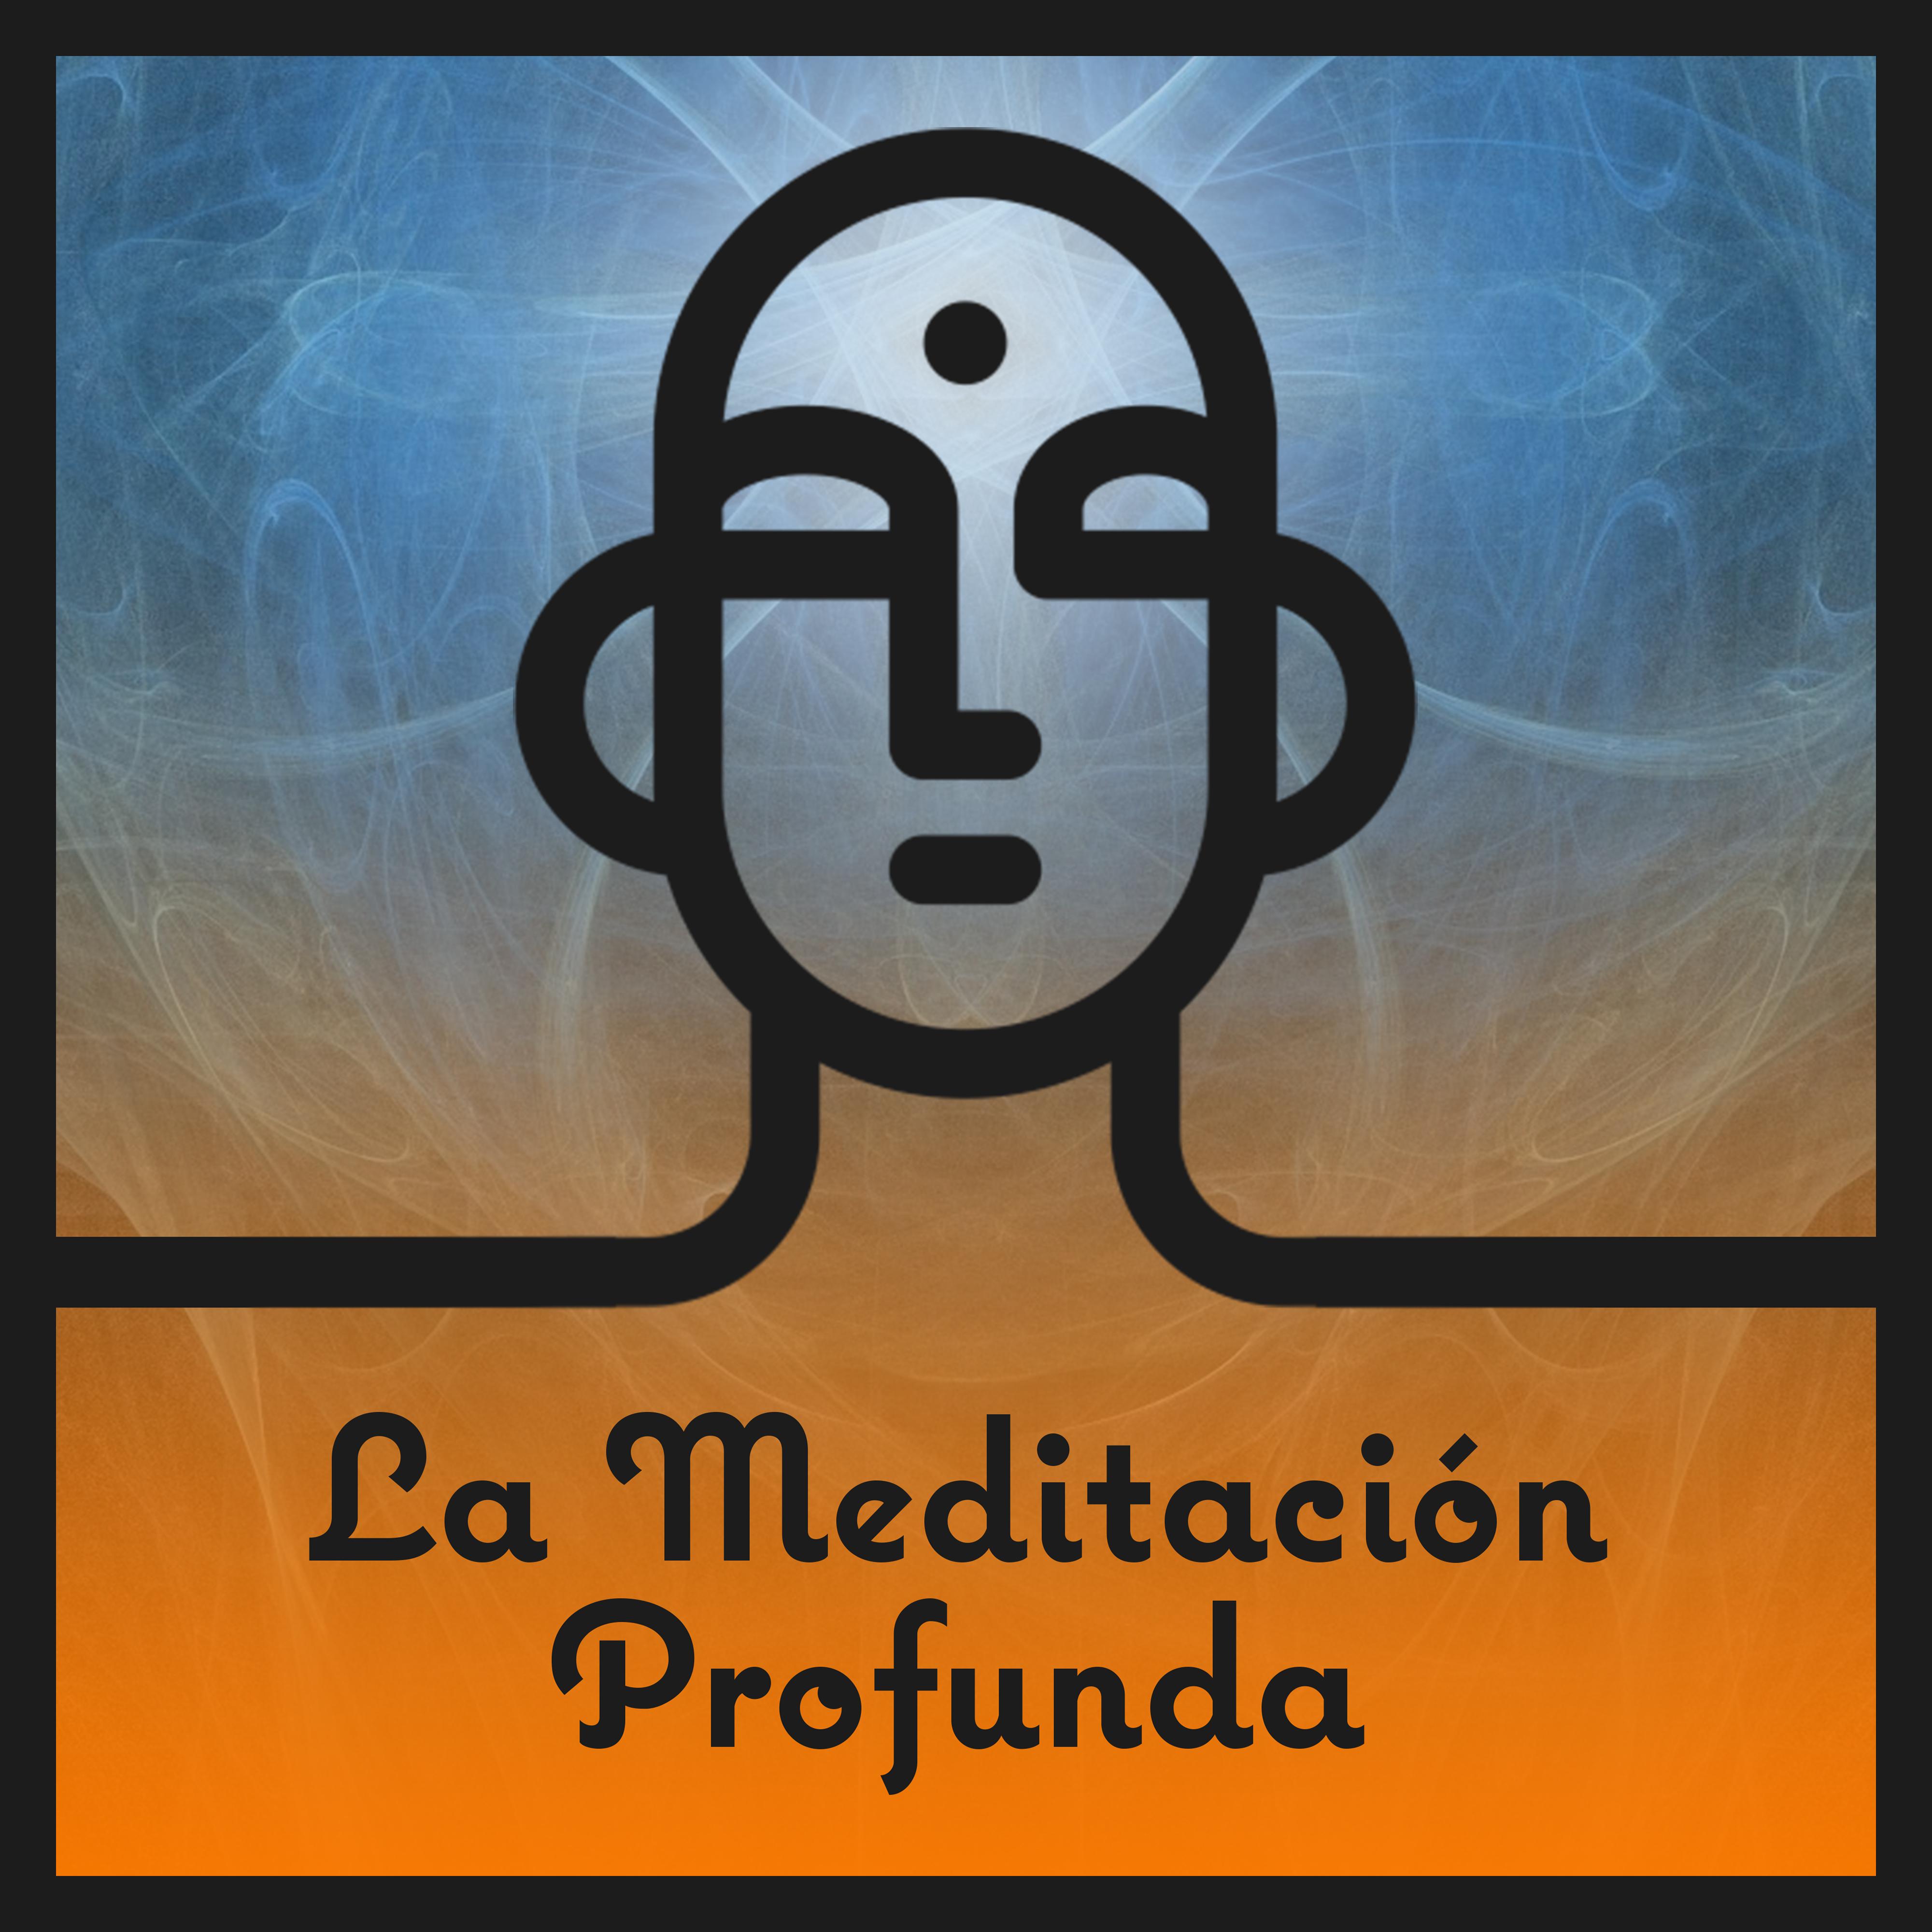 La Meditacio n Profunda  Mente Pura, la Mu sica, el Yoga, la Armoni a, la Paz Interior, la Relajacio n de la Mente, Medite